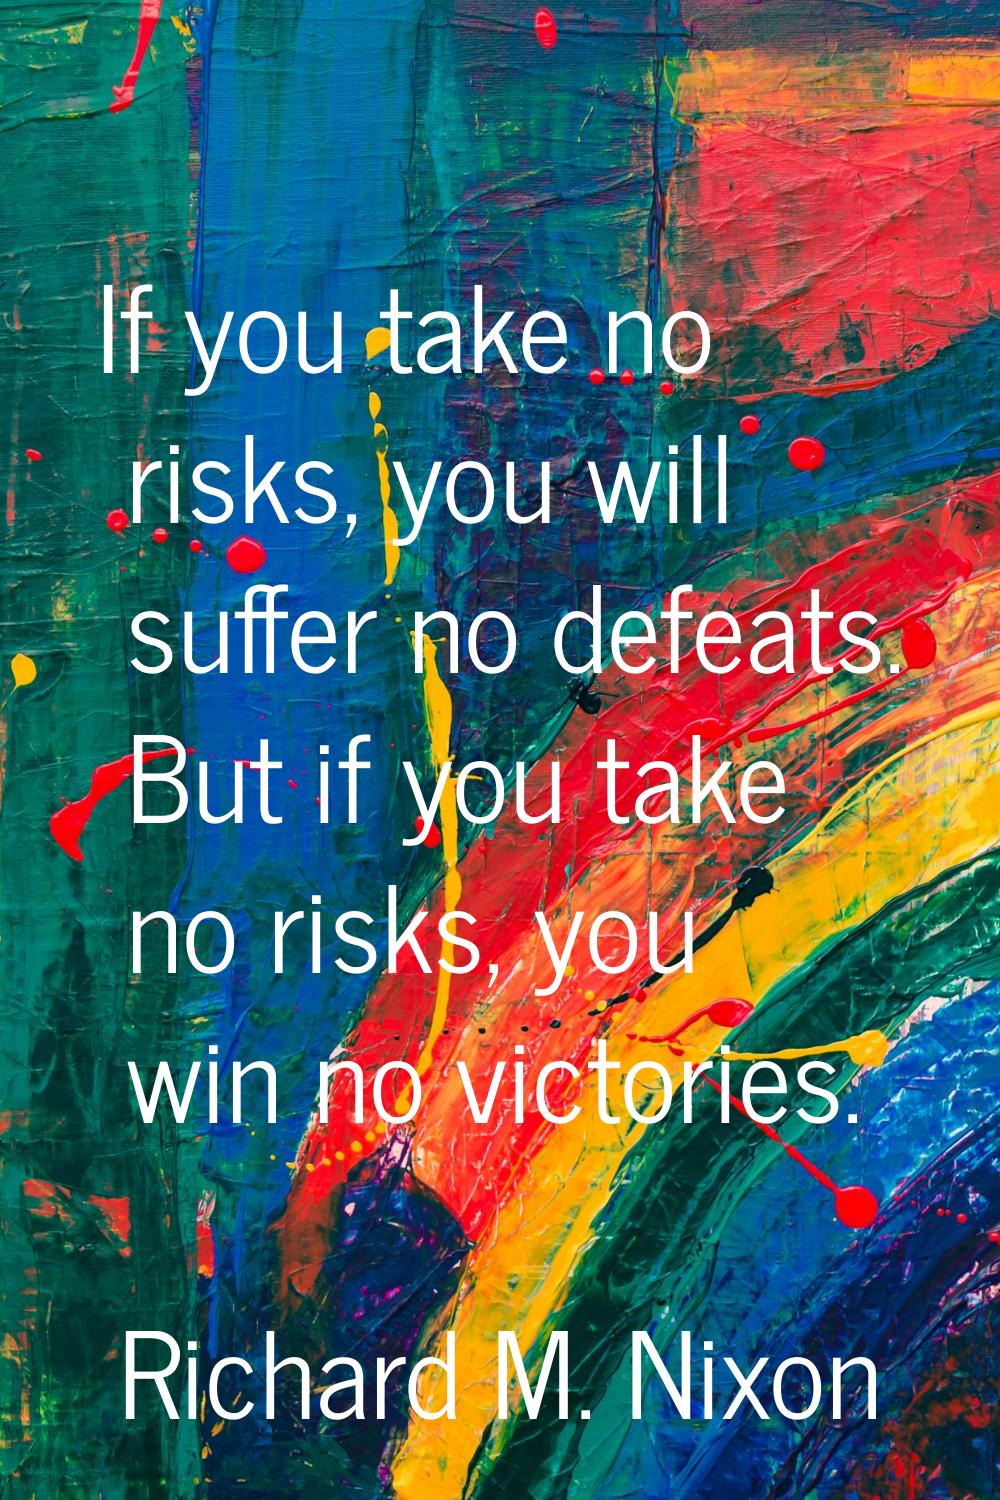 If you take no risks, you will suffer no defeats. But if you take no risks, you win no victories.